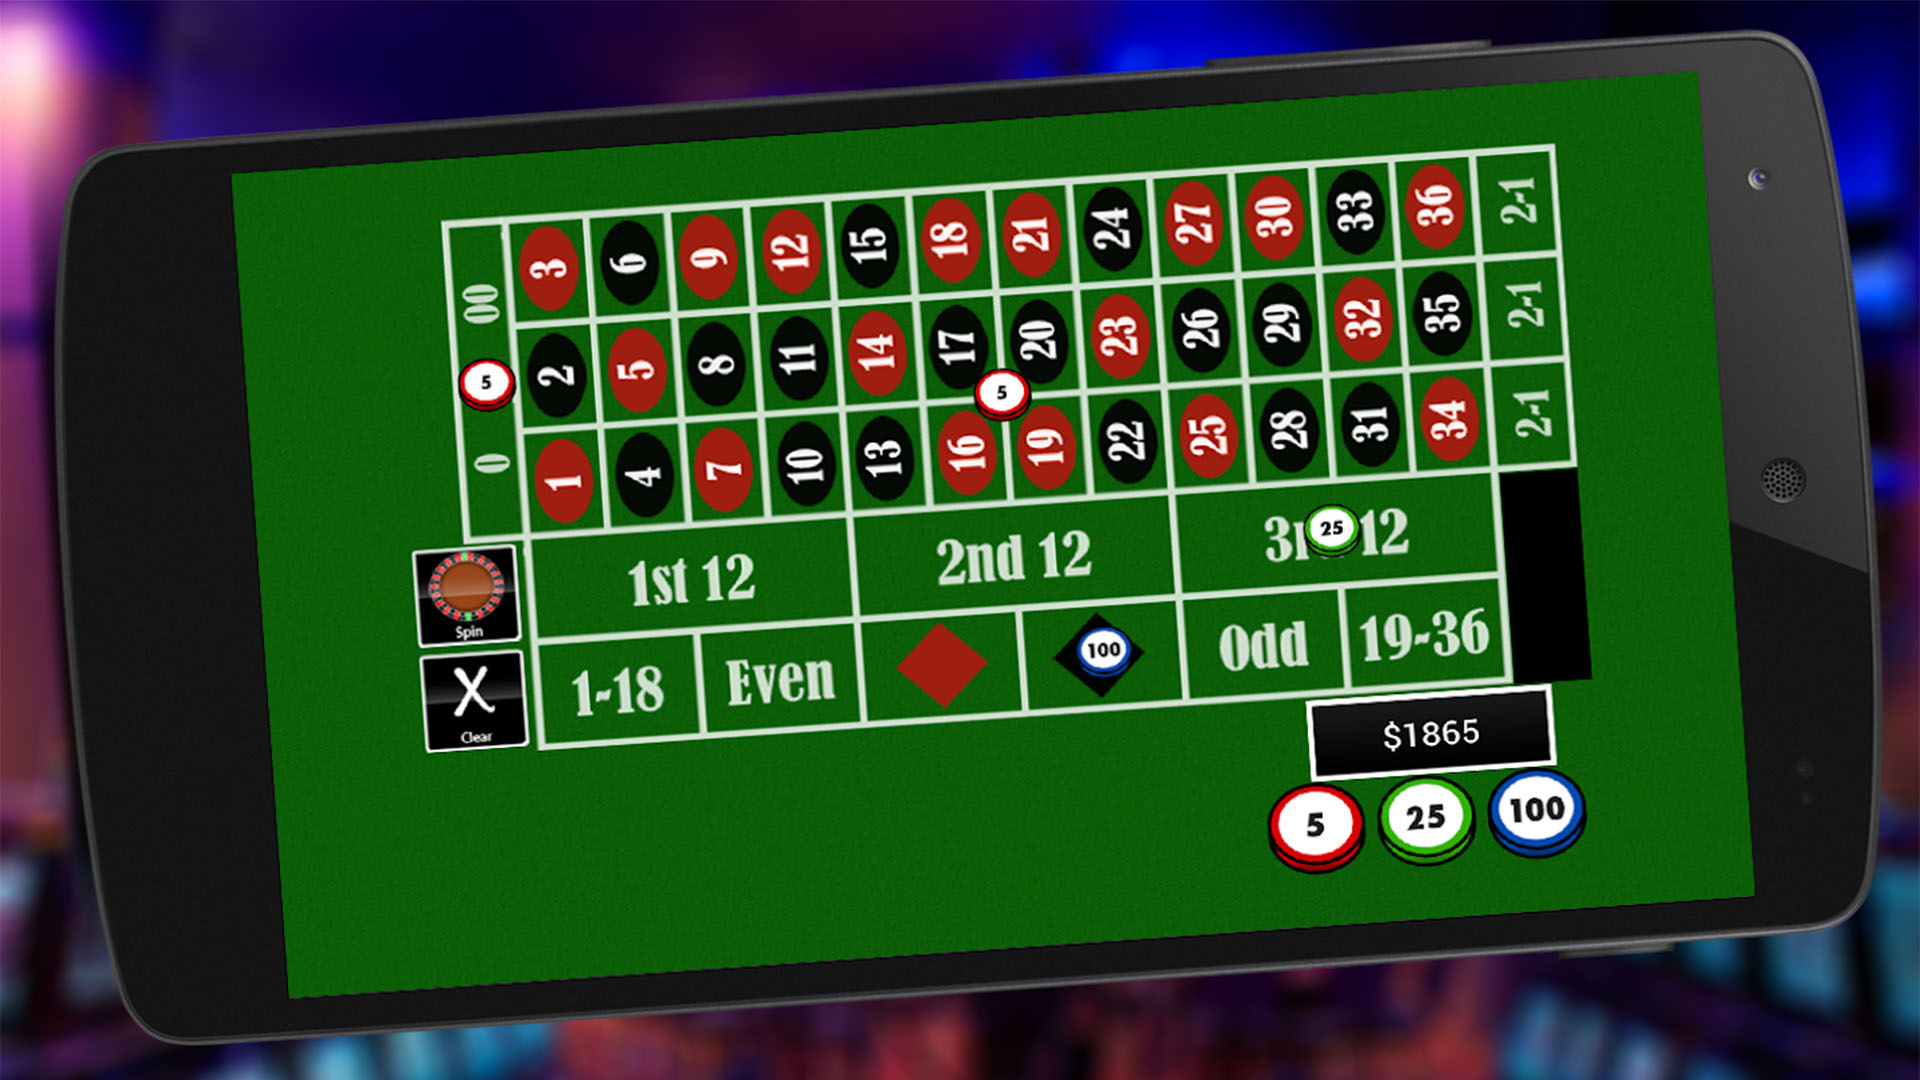 25 in 1 Casino screenshot 2020